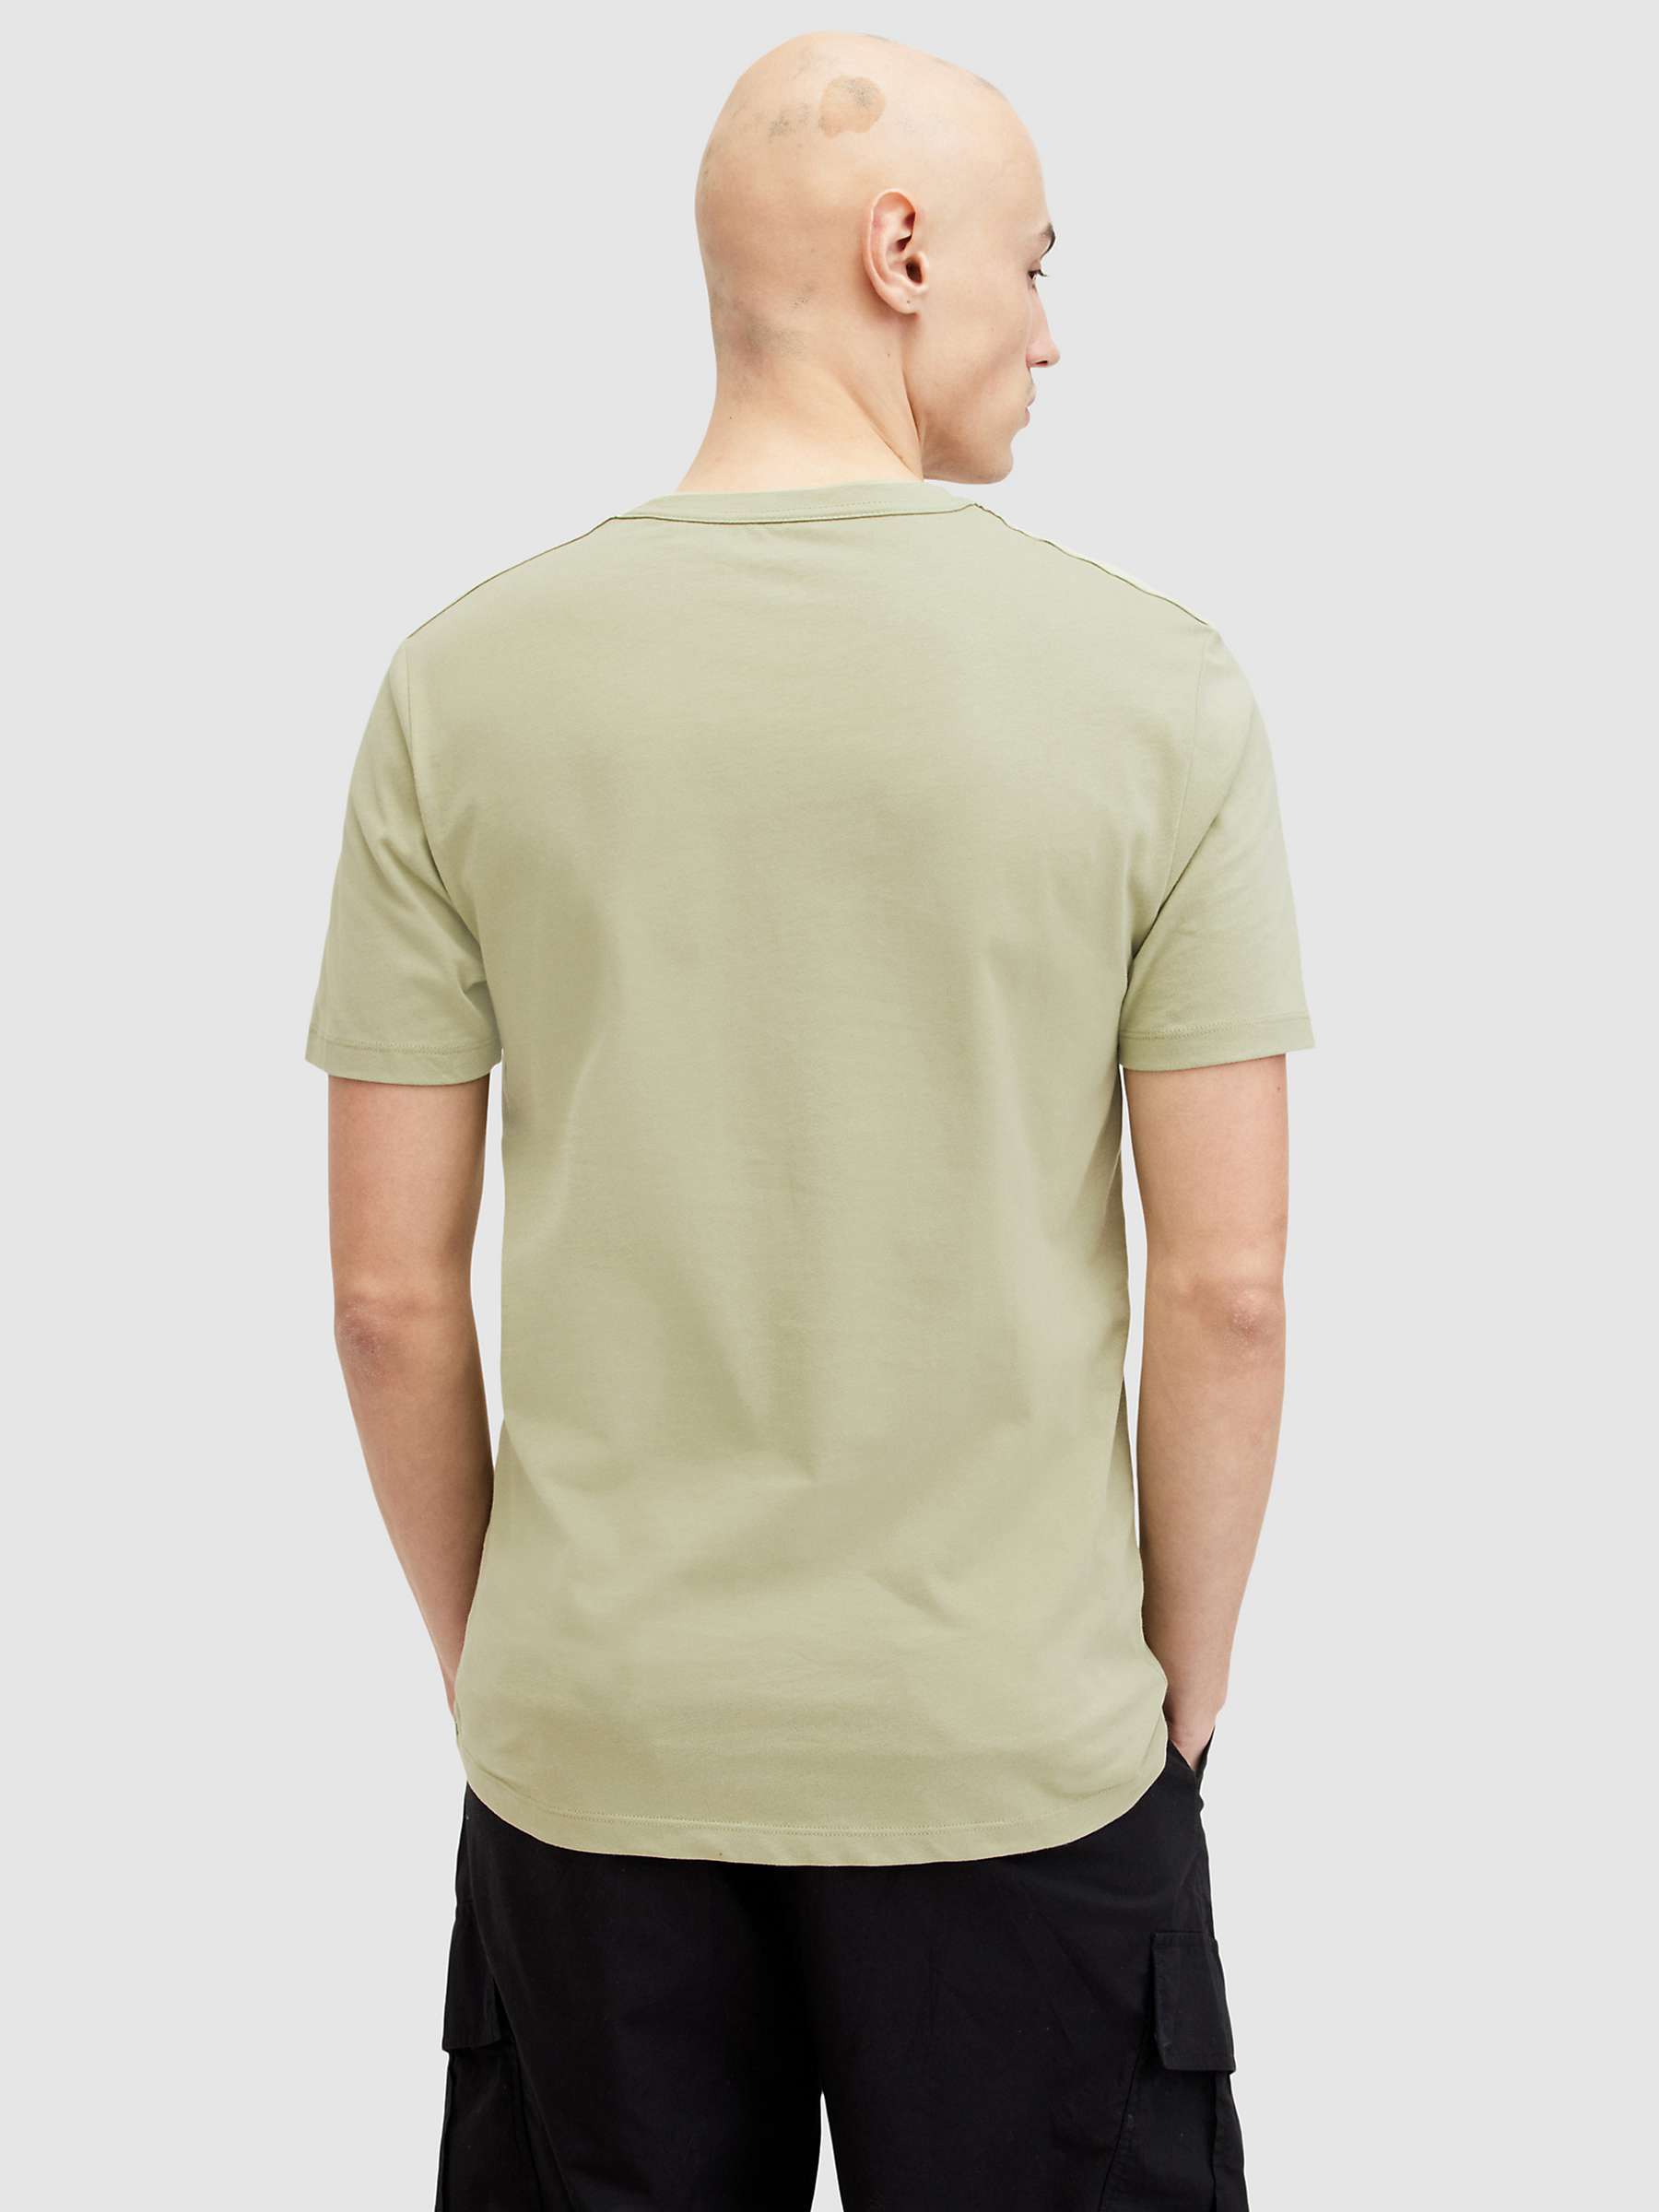 Buy AllSaints Brace Tonic Crew Neck T-Shirts, Pack of 3 Online at johnlewis.com